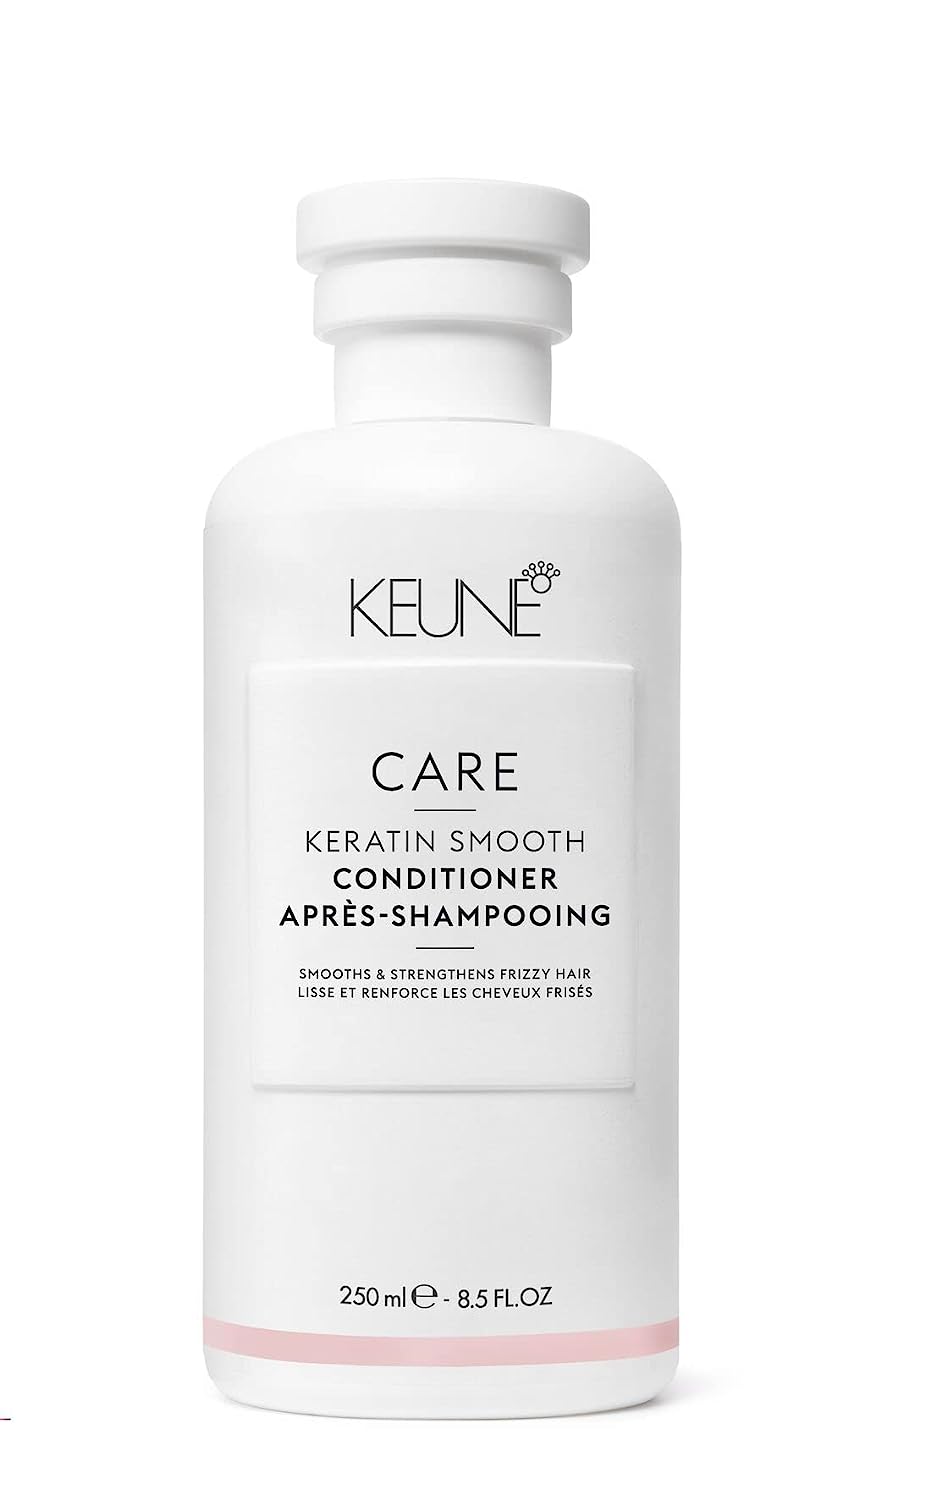 Keratin Smooth Conditioner - Keune Care